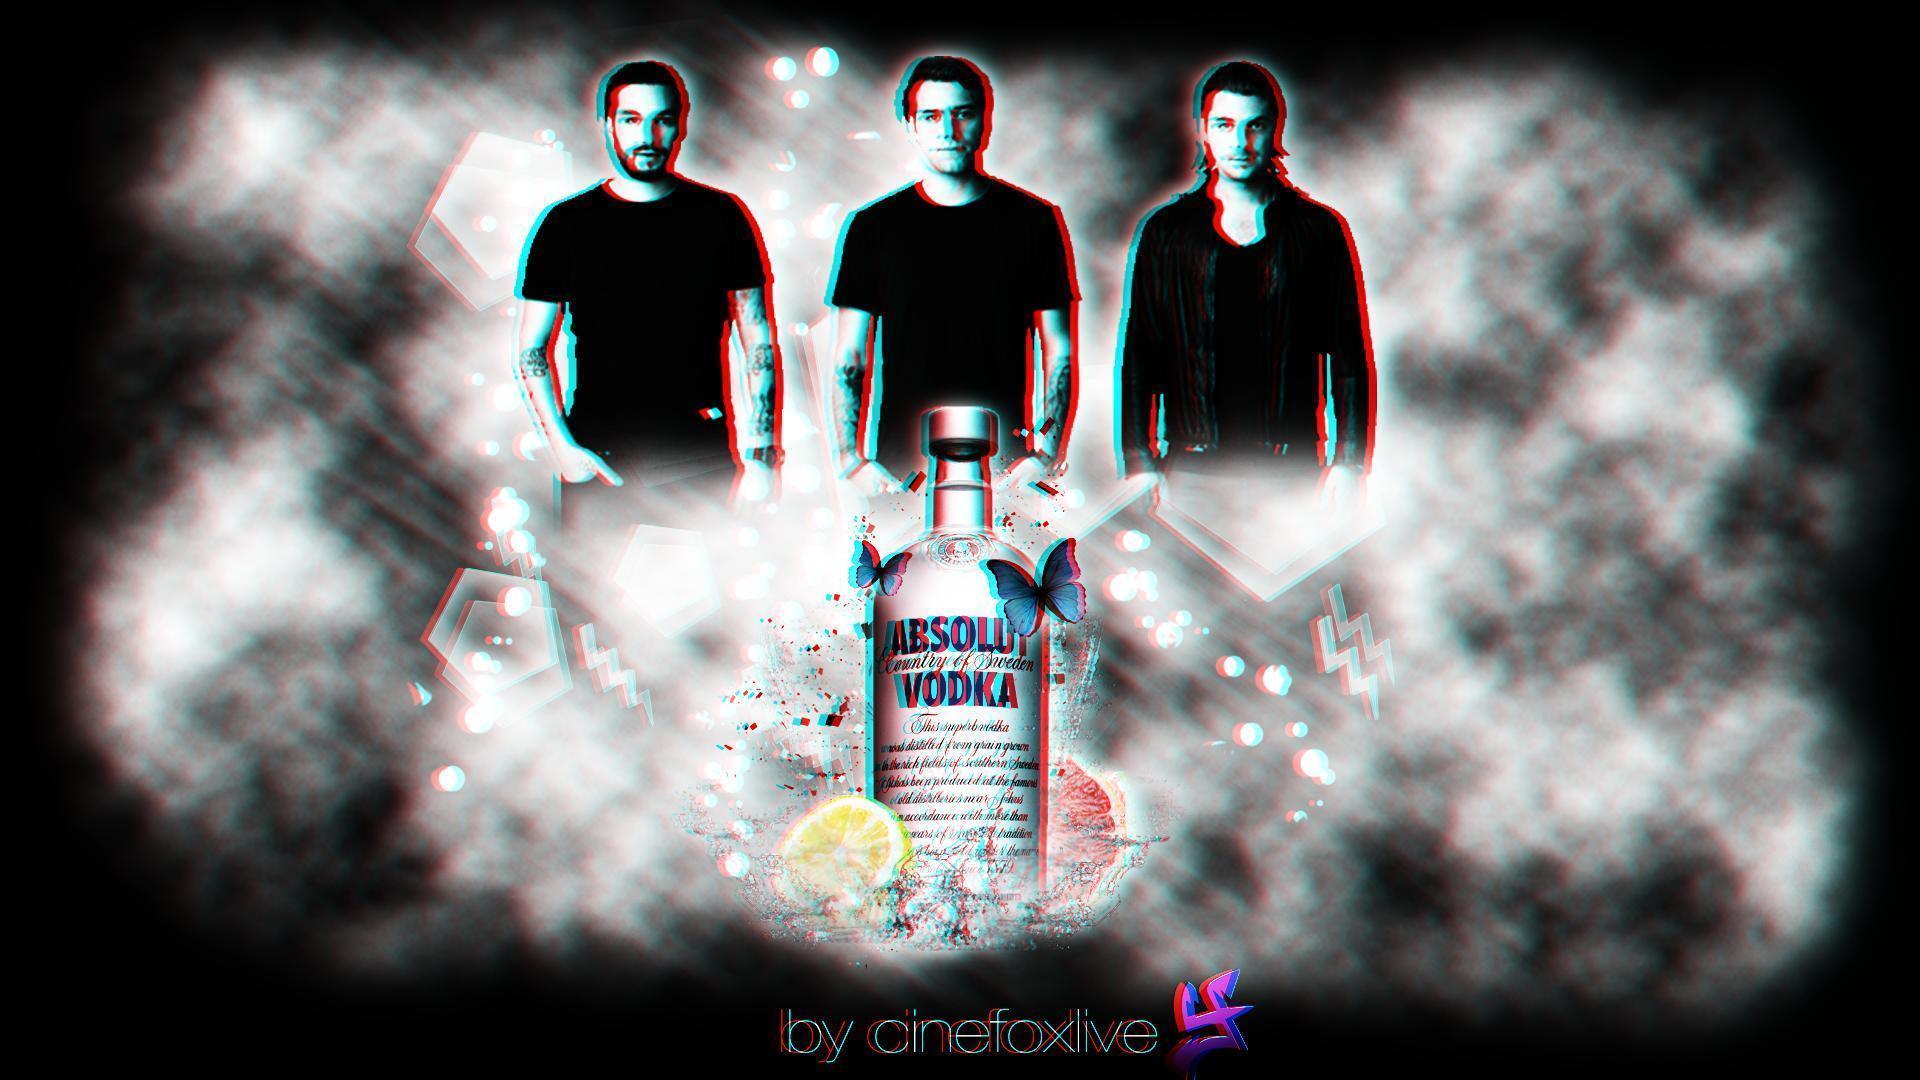 Absolut Vodka and swedish house mafia 3D